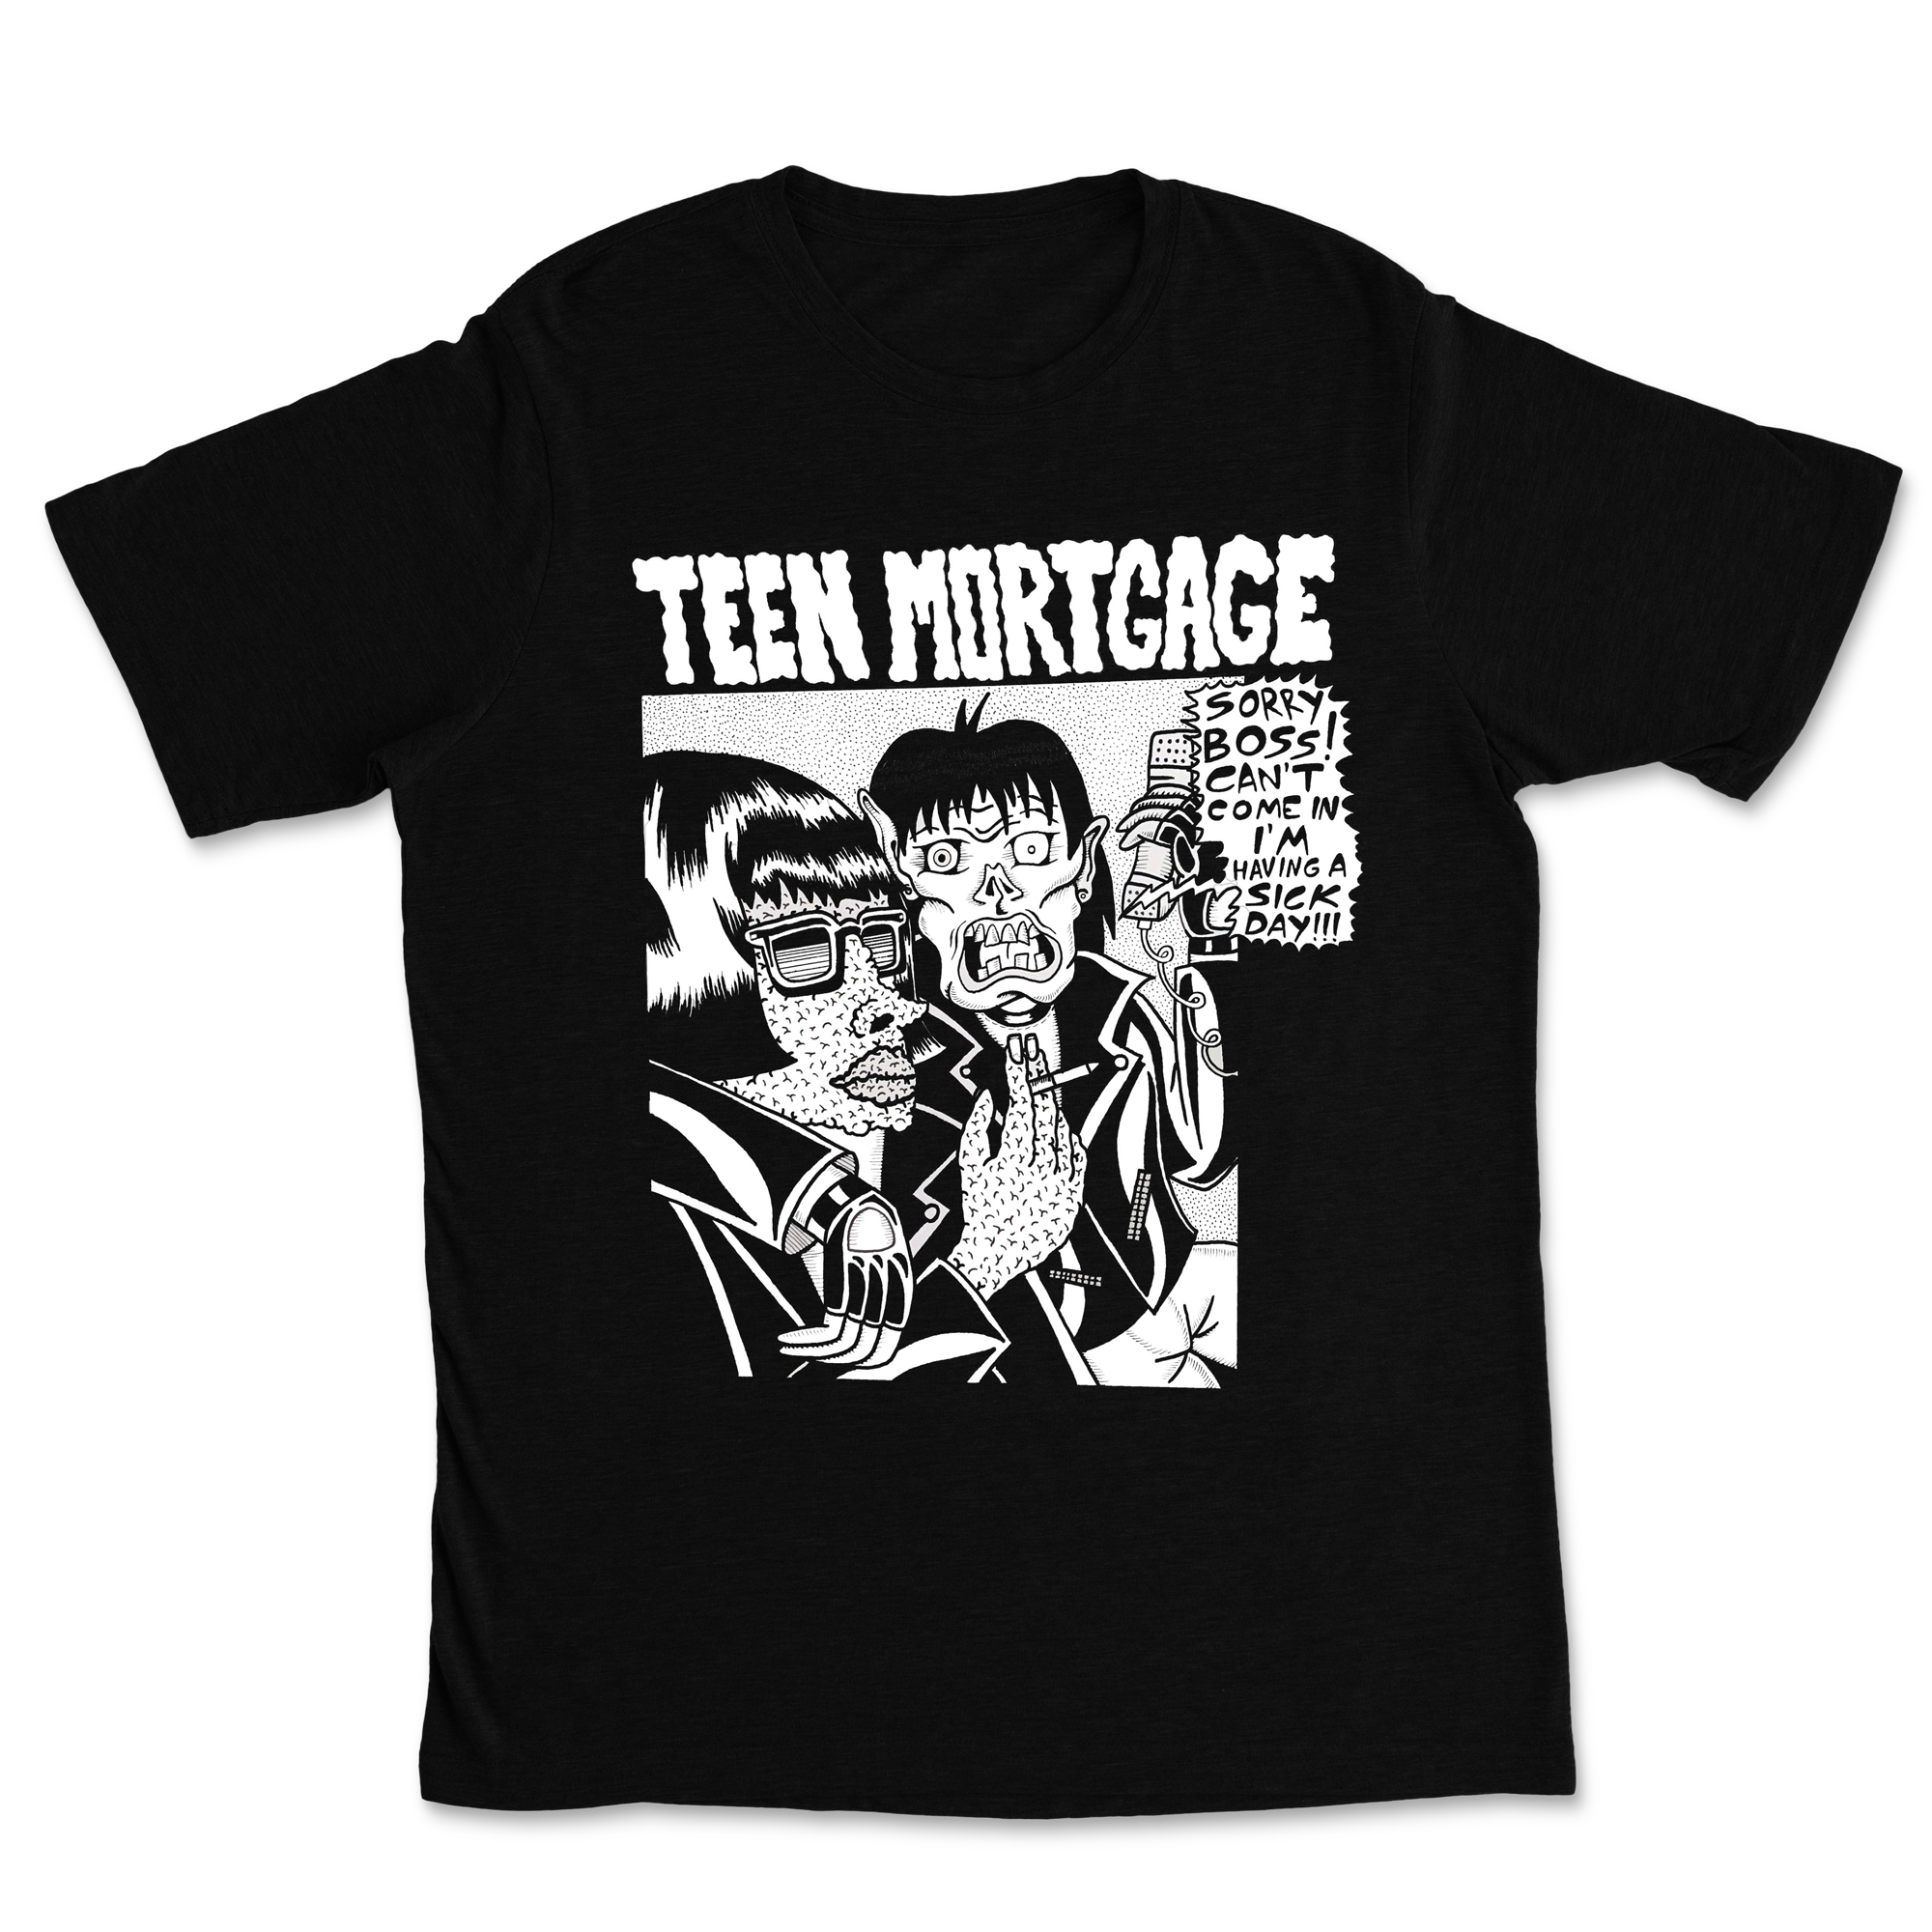 Teen Mortgage "Sick Day" Shirt